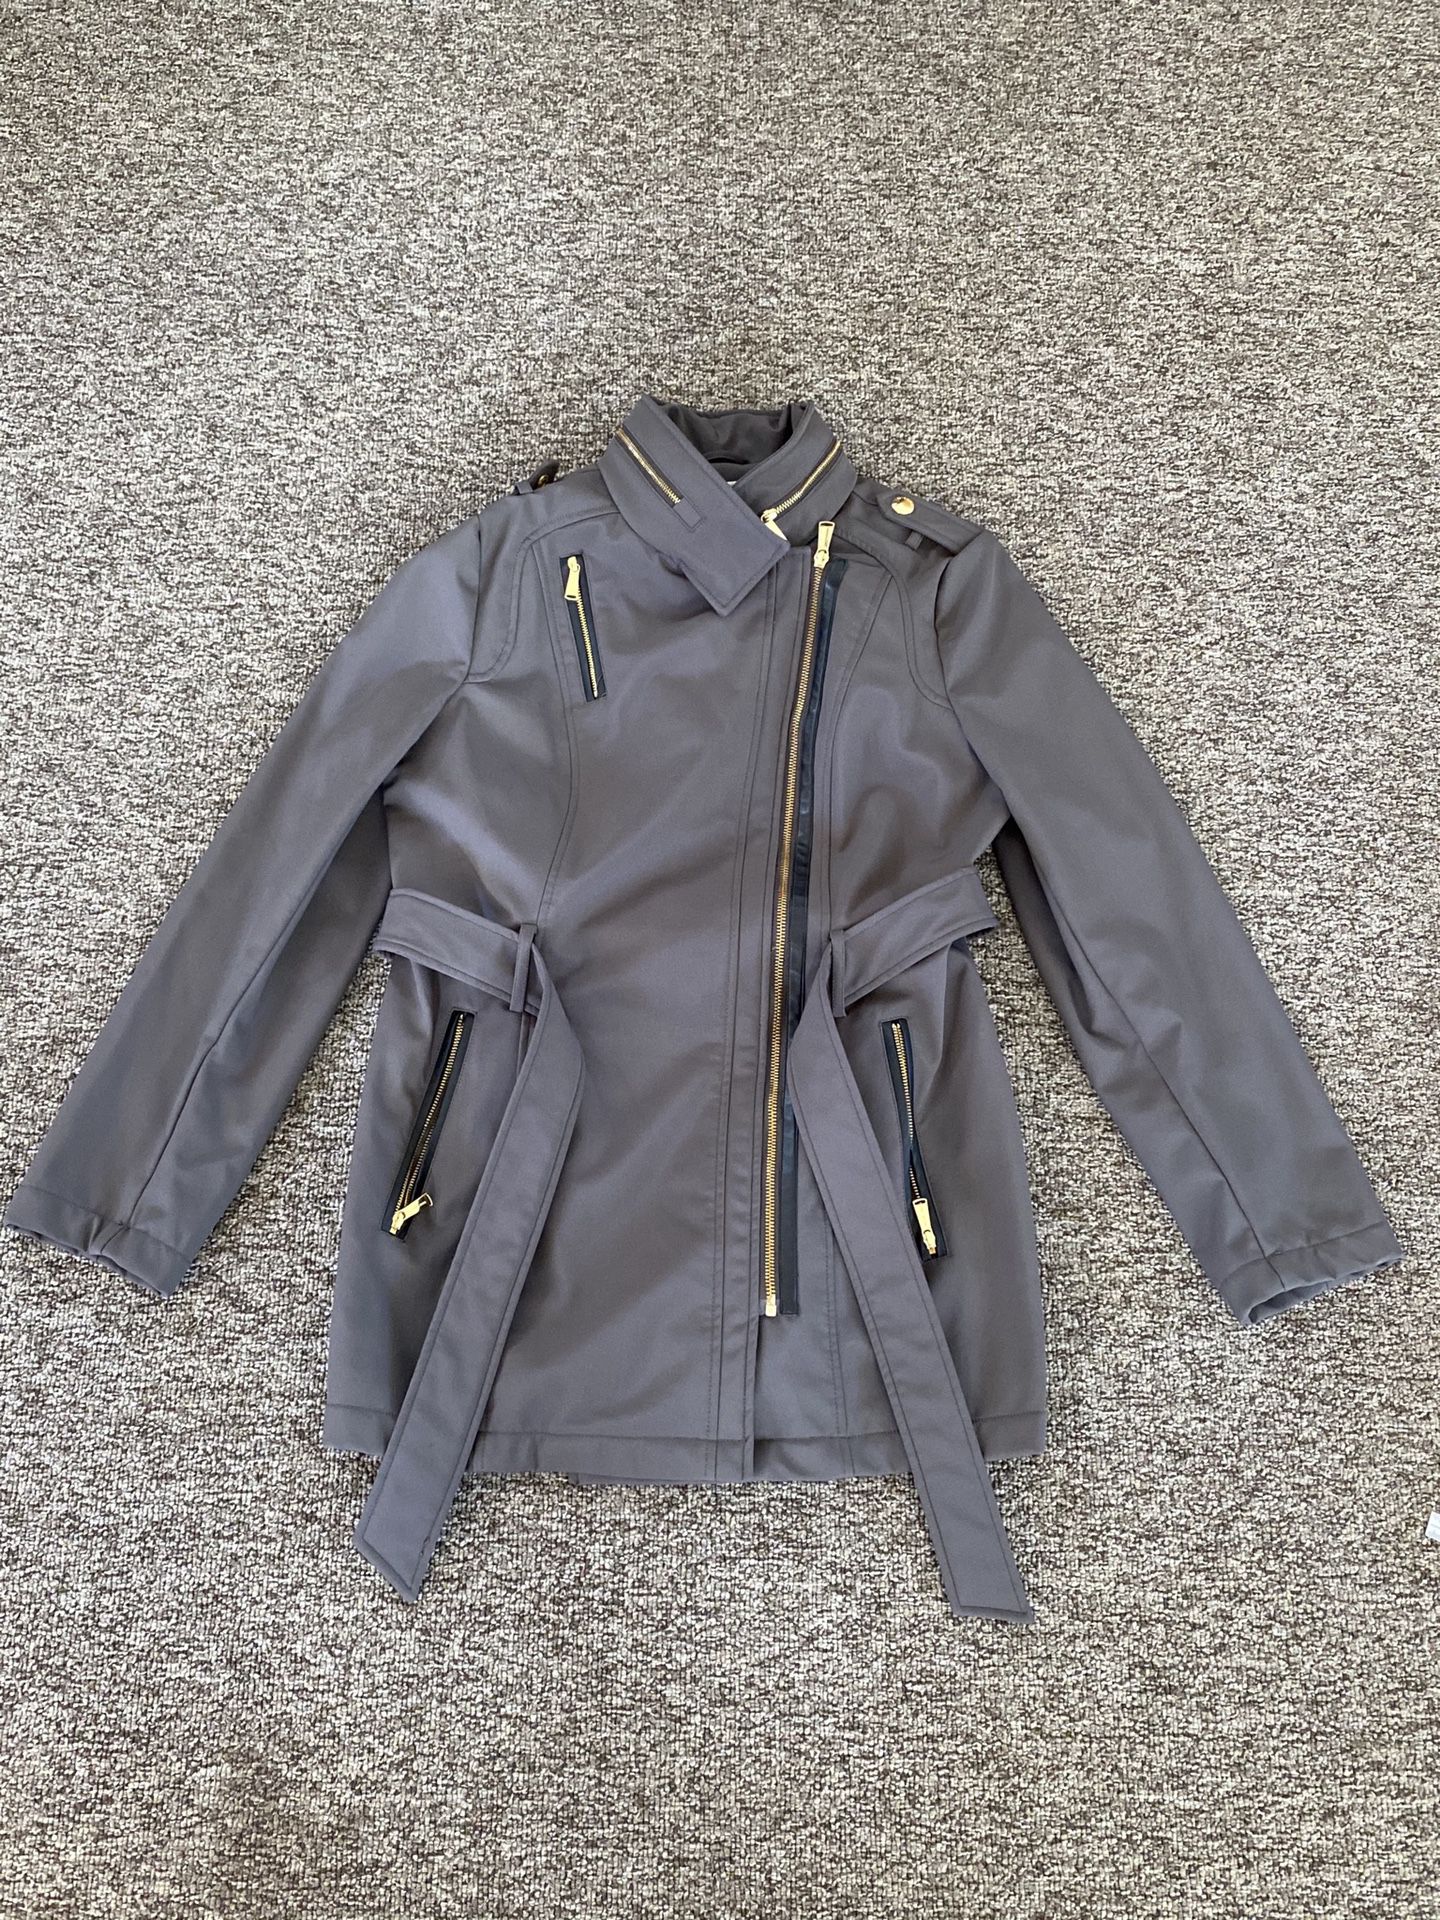 Women’s Michael kors jacket size M